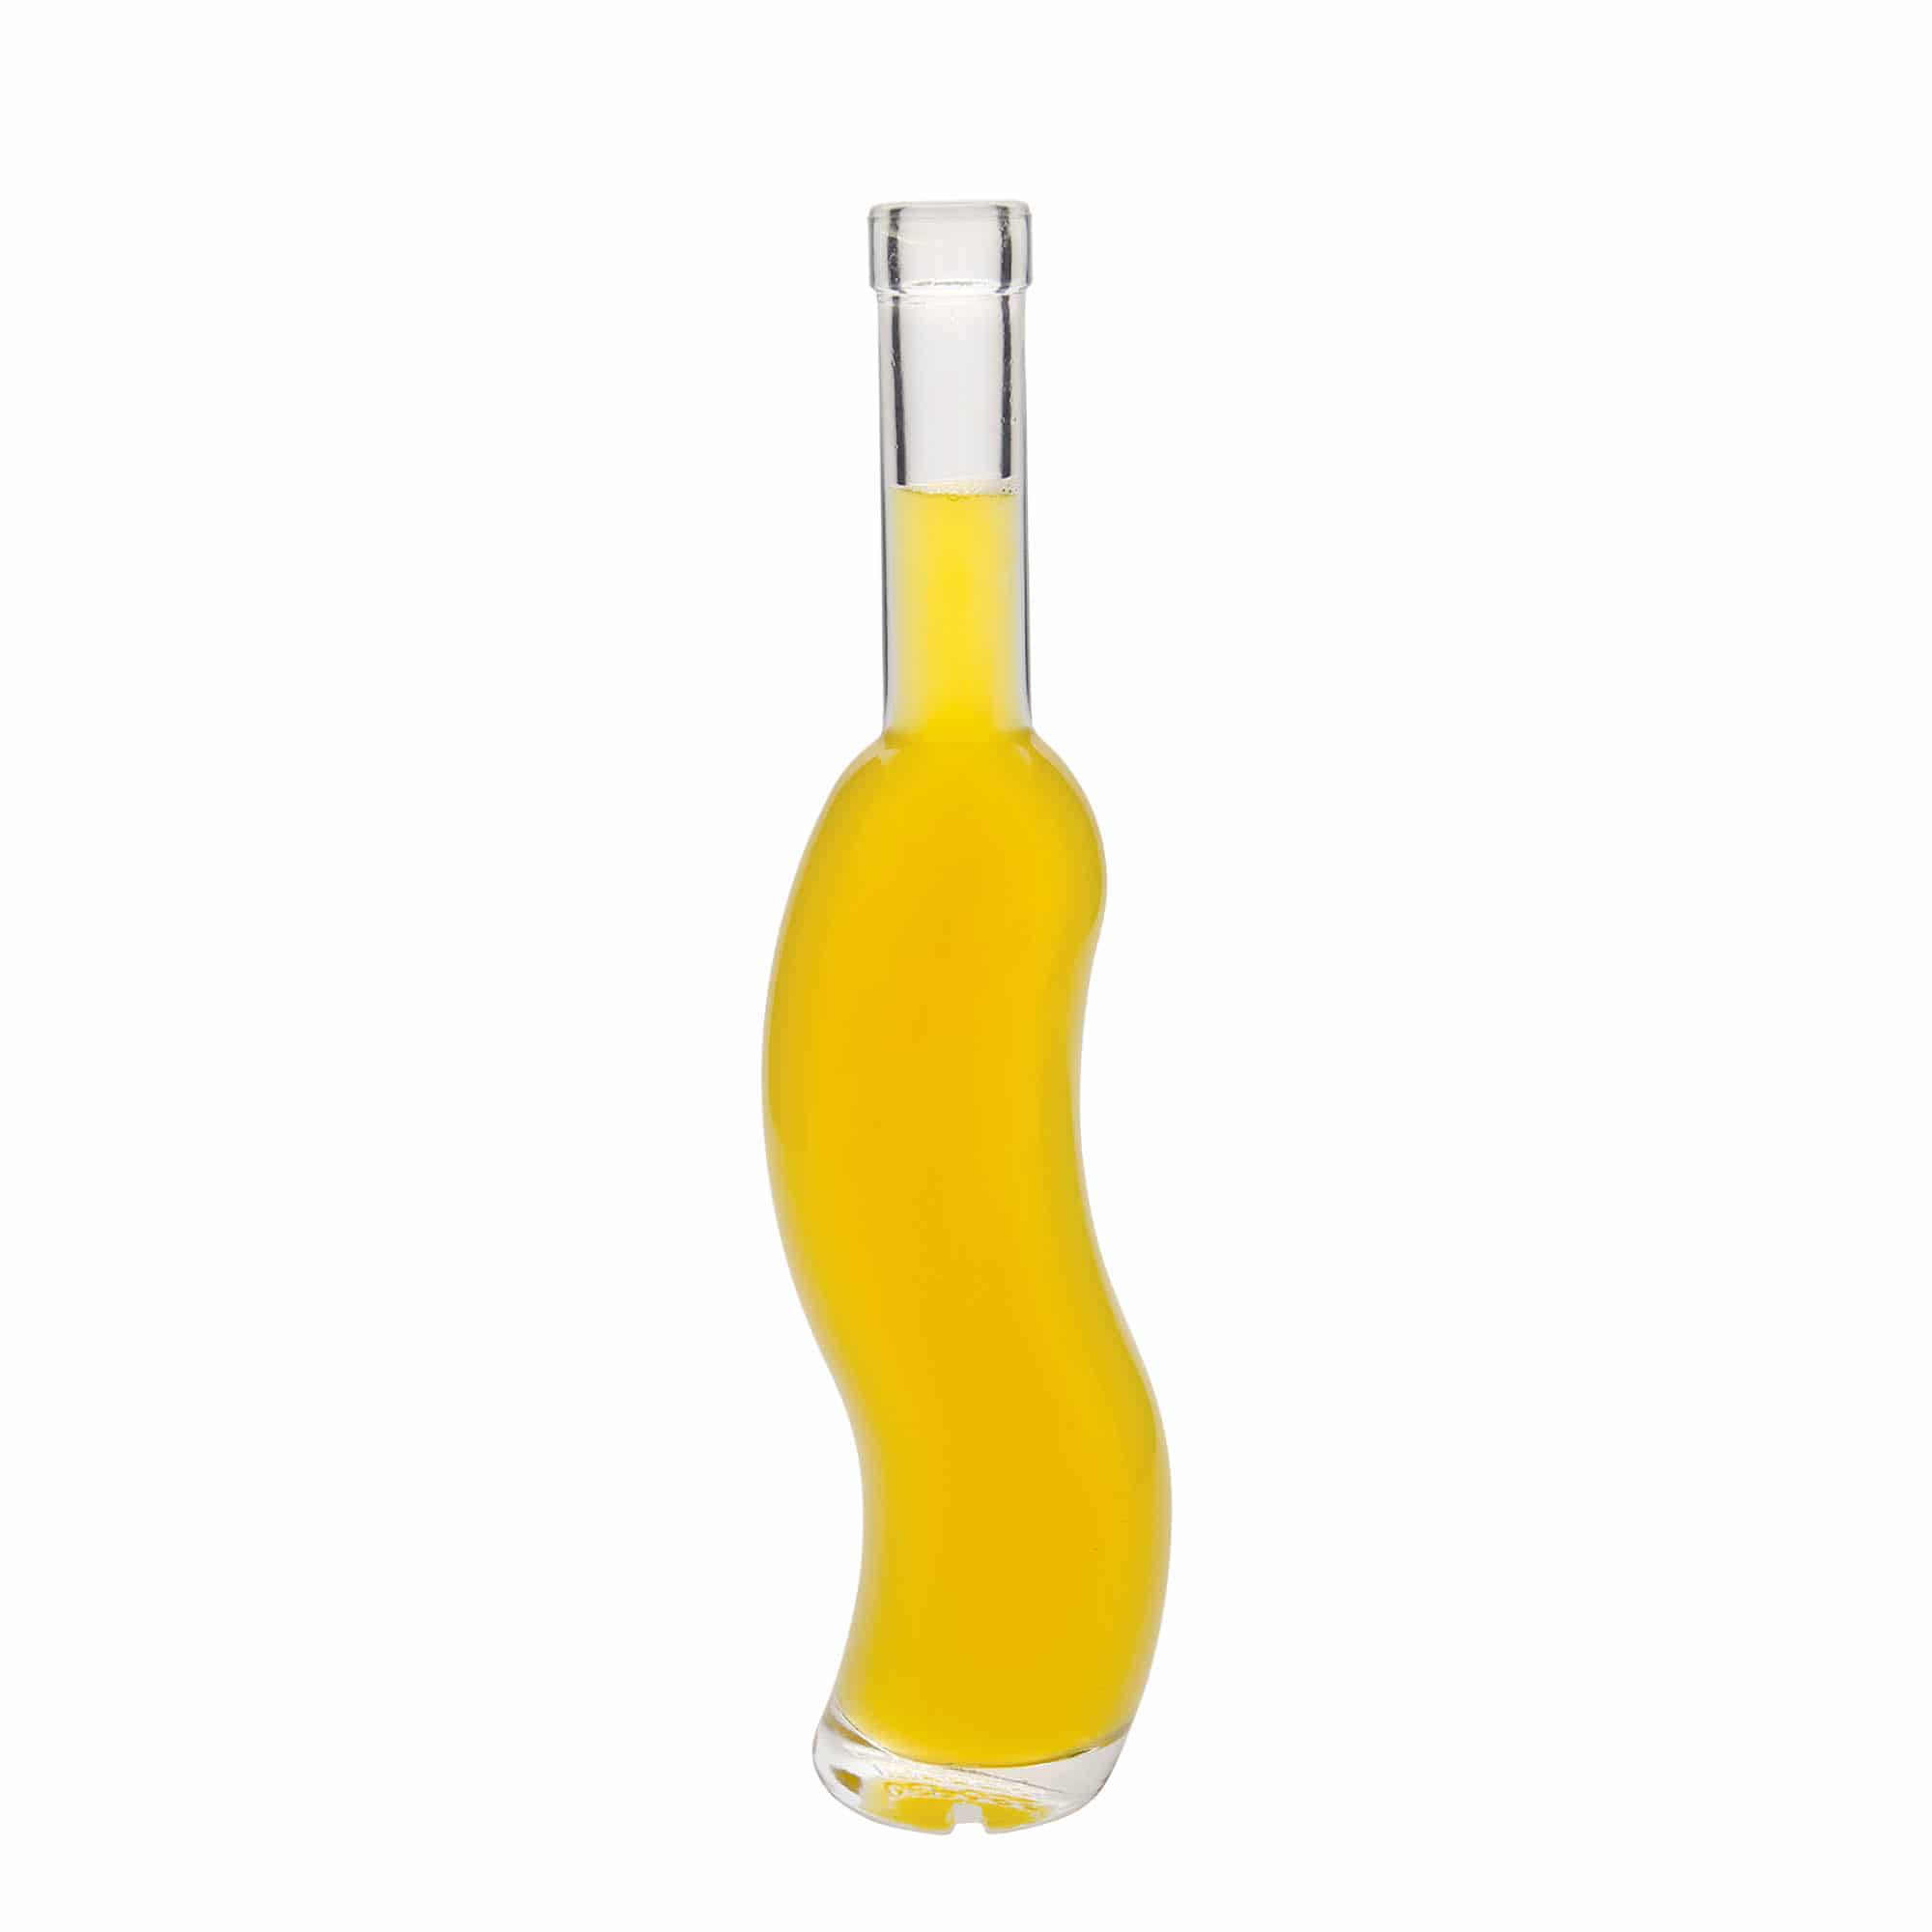 350 ml glass bottle 'La-Ola', semicircular, closure: cork